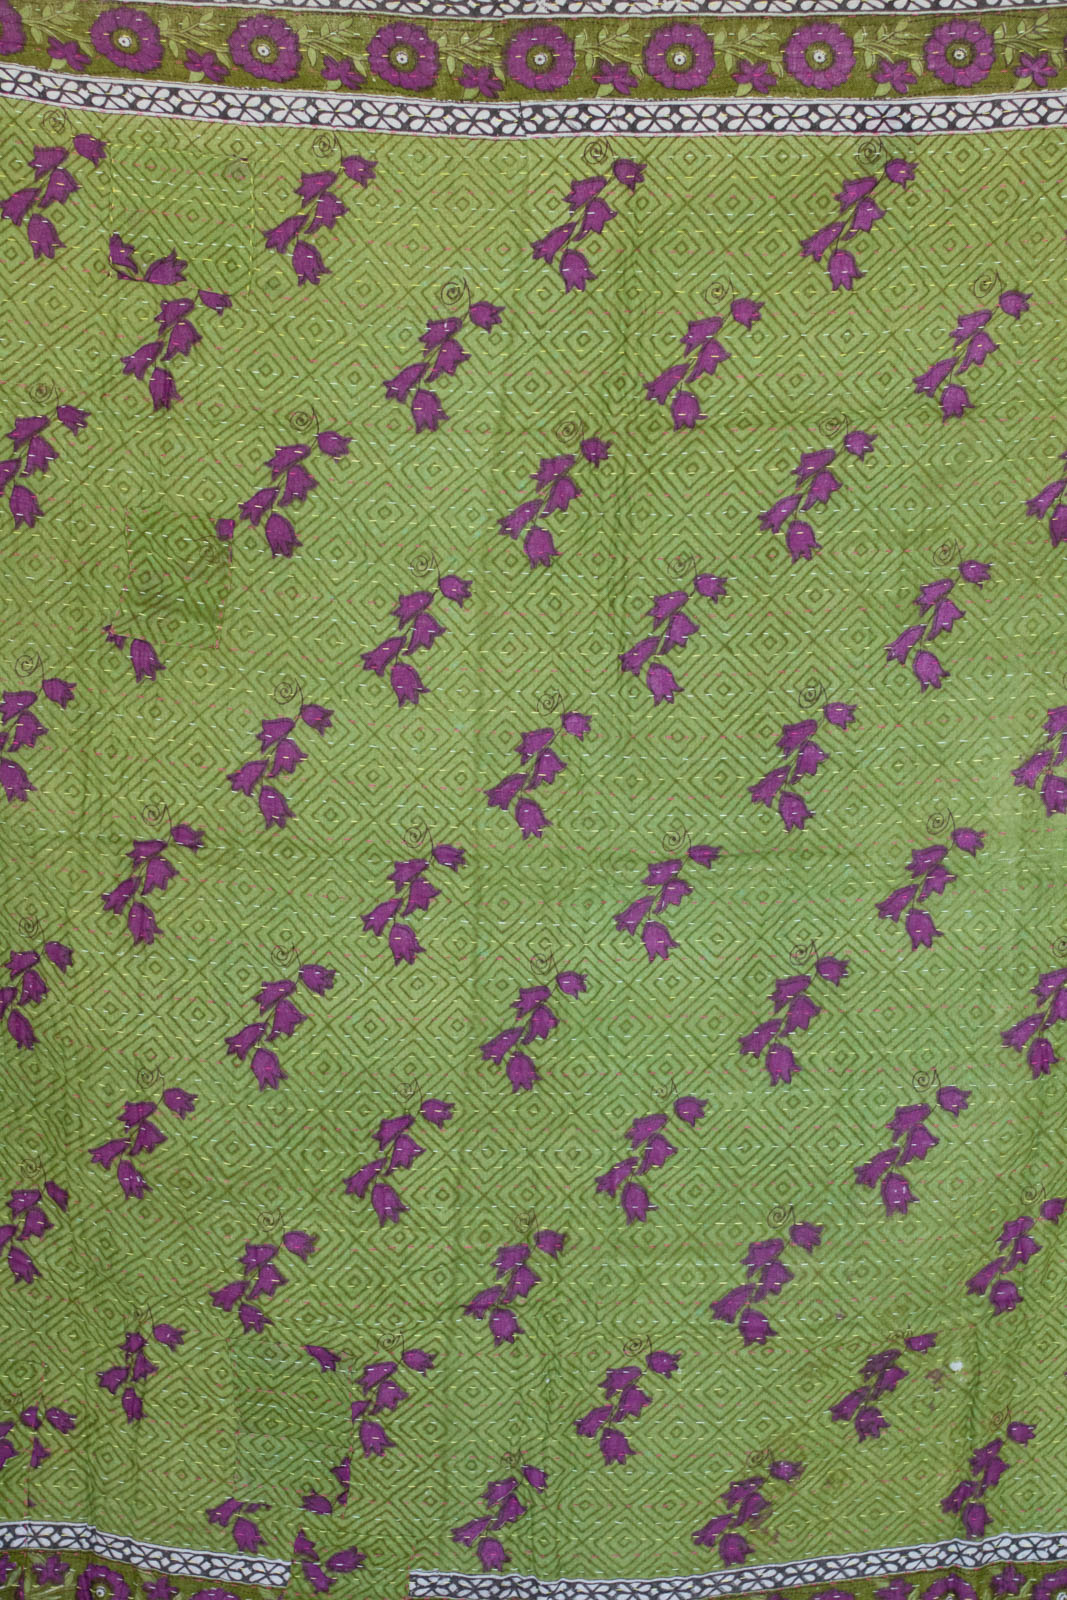 Wonder No. 6 Kantha Mini Blanket